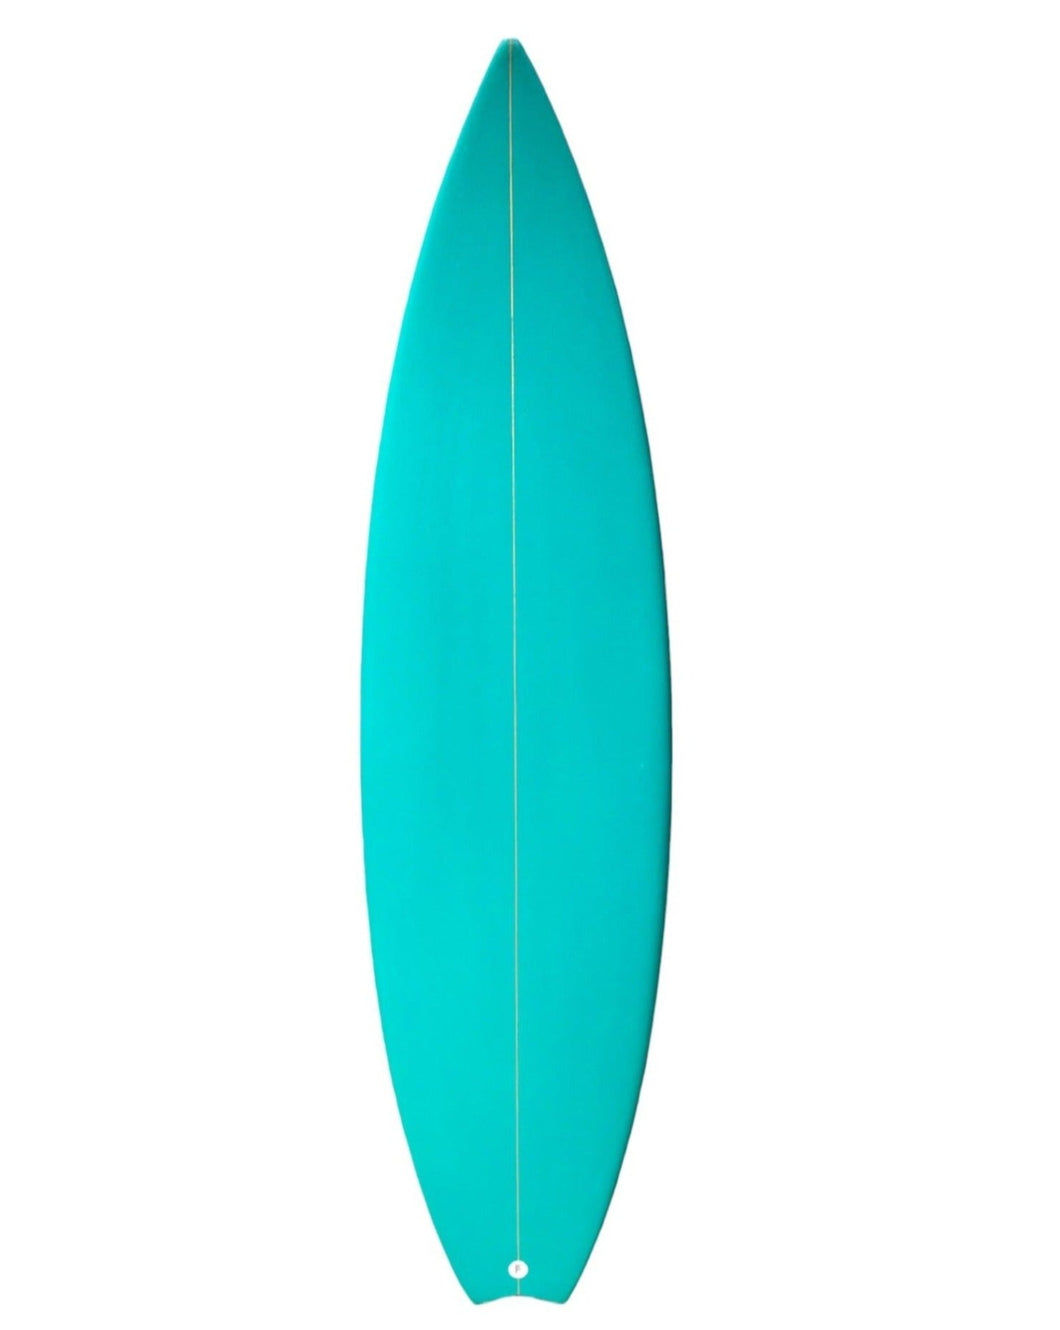 Brand new short surfboard